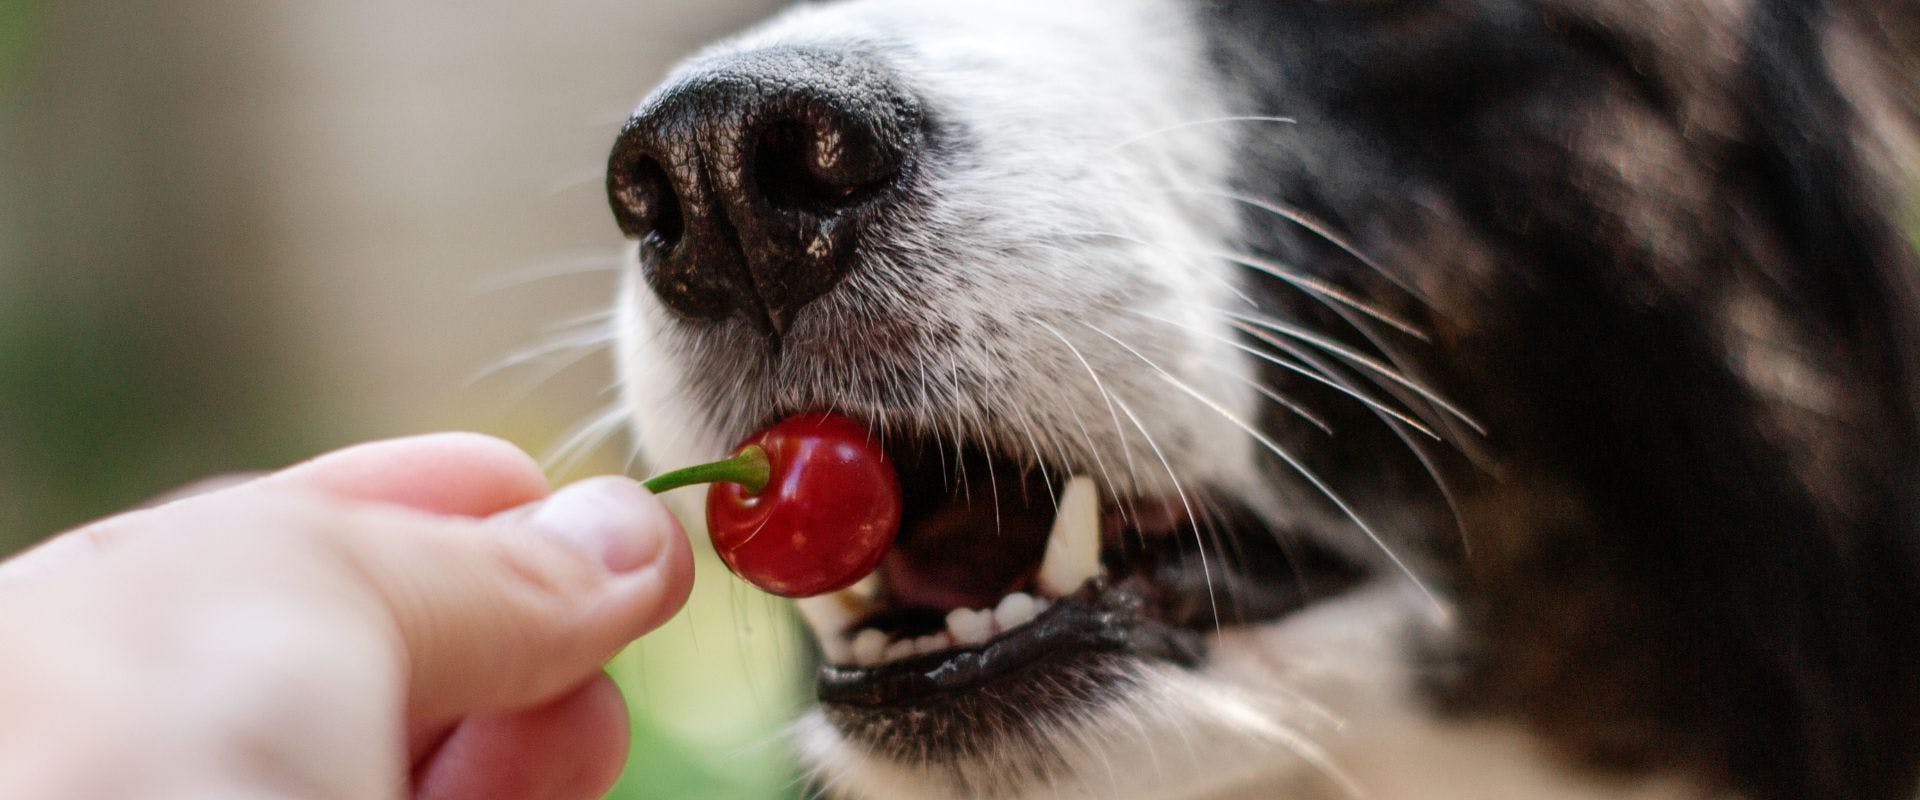 Border Collie dog eating cherry